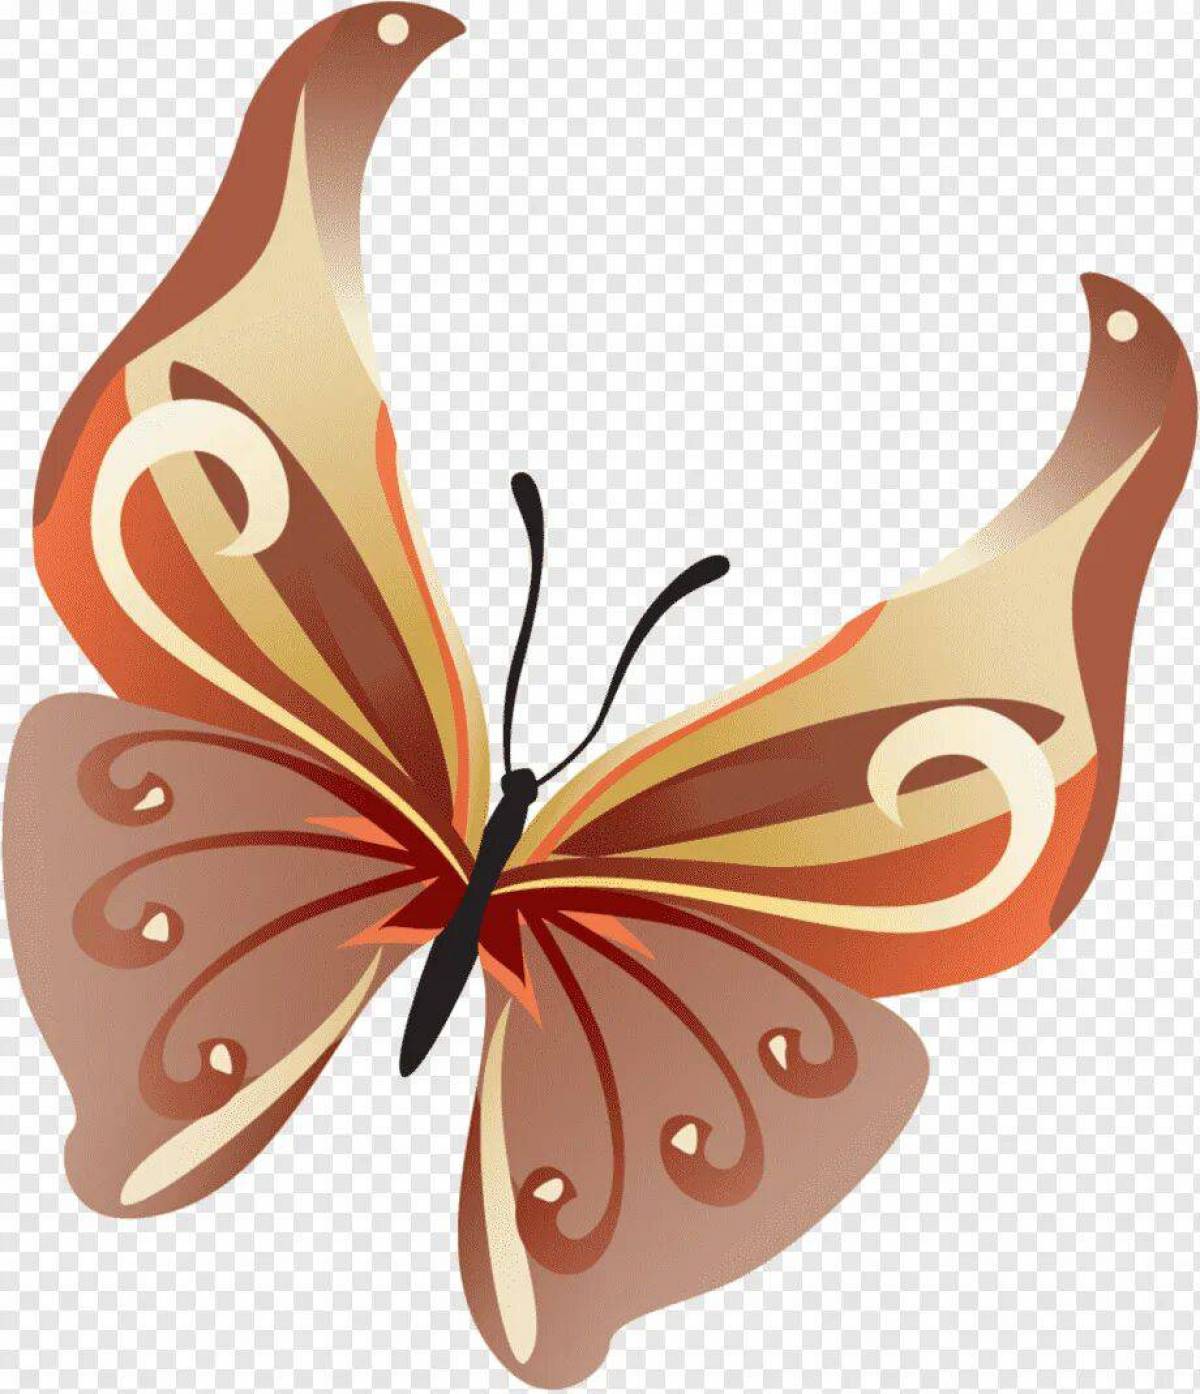 Картинки на прозрачном фоне. Бабочка. Красивый векторные бабочки. Золотые бабочки на прозрачном фоне. Красивые бабочки на прозрачном фоне.